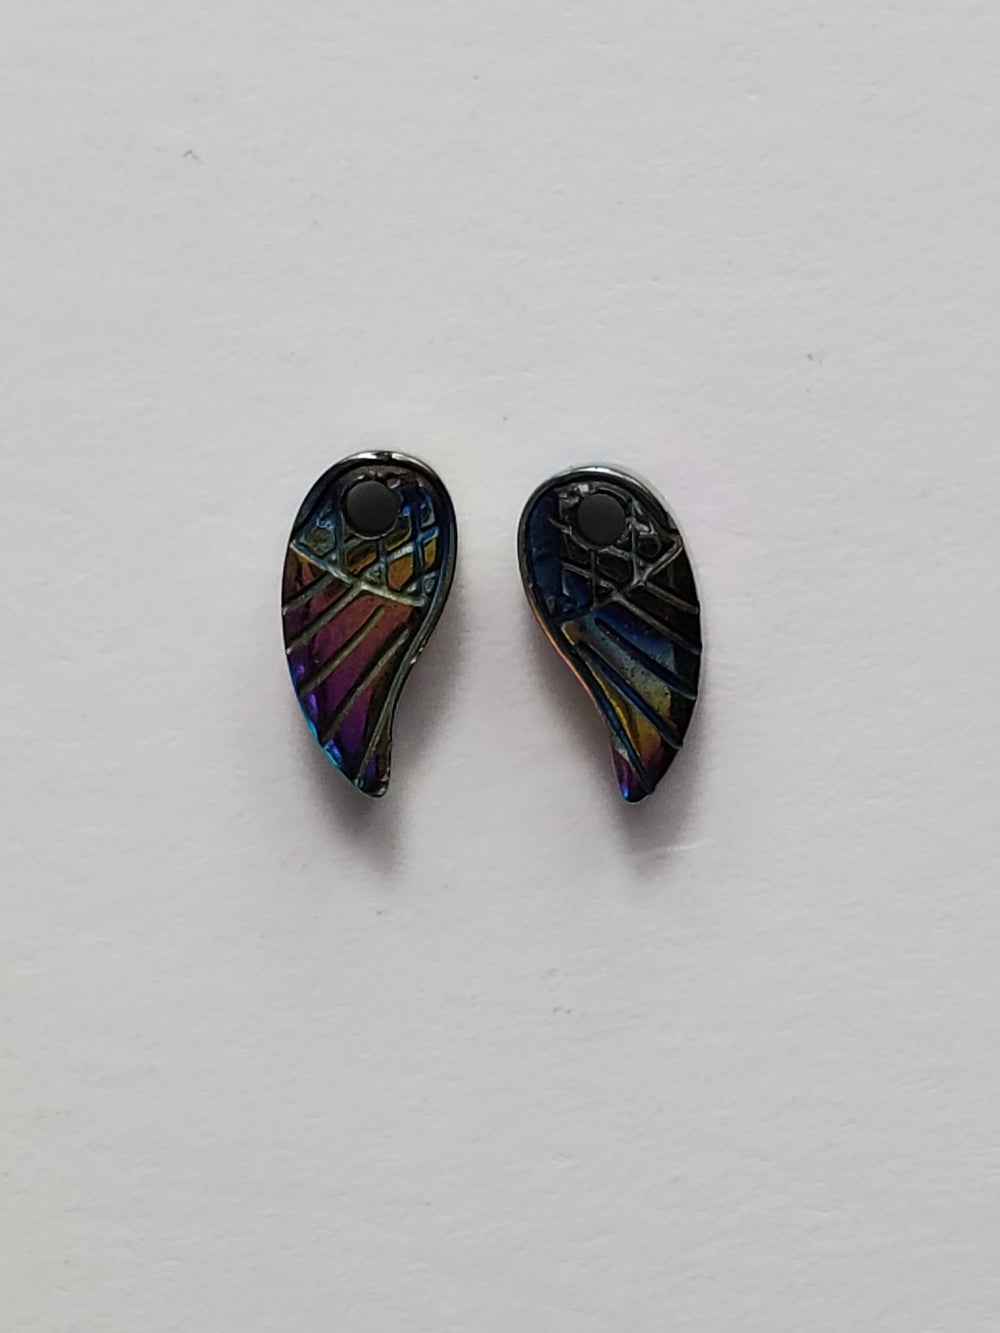 Wings Hematite Beads Spacer (10pcs)